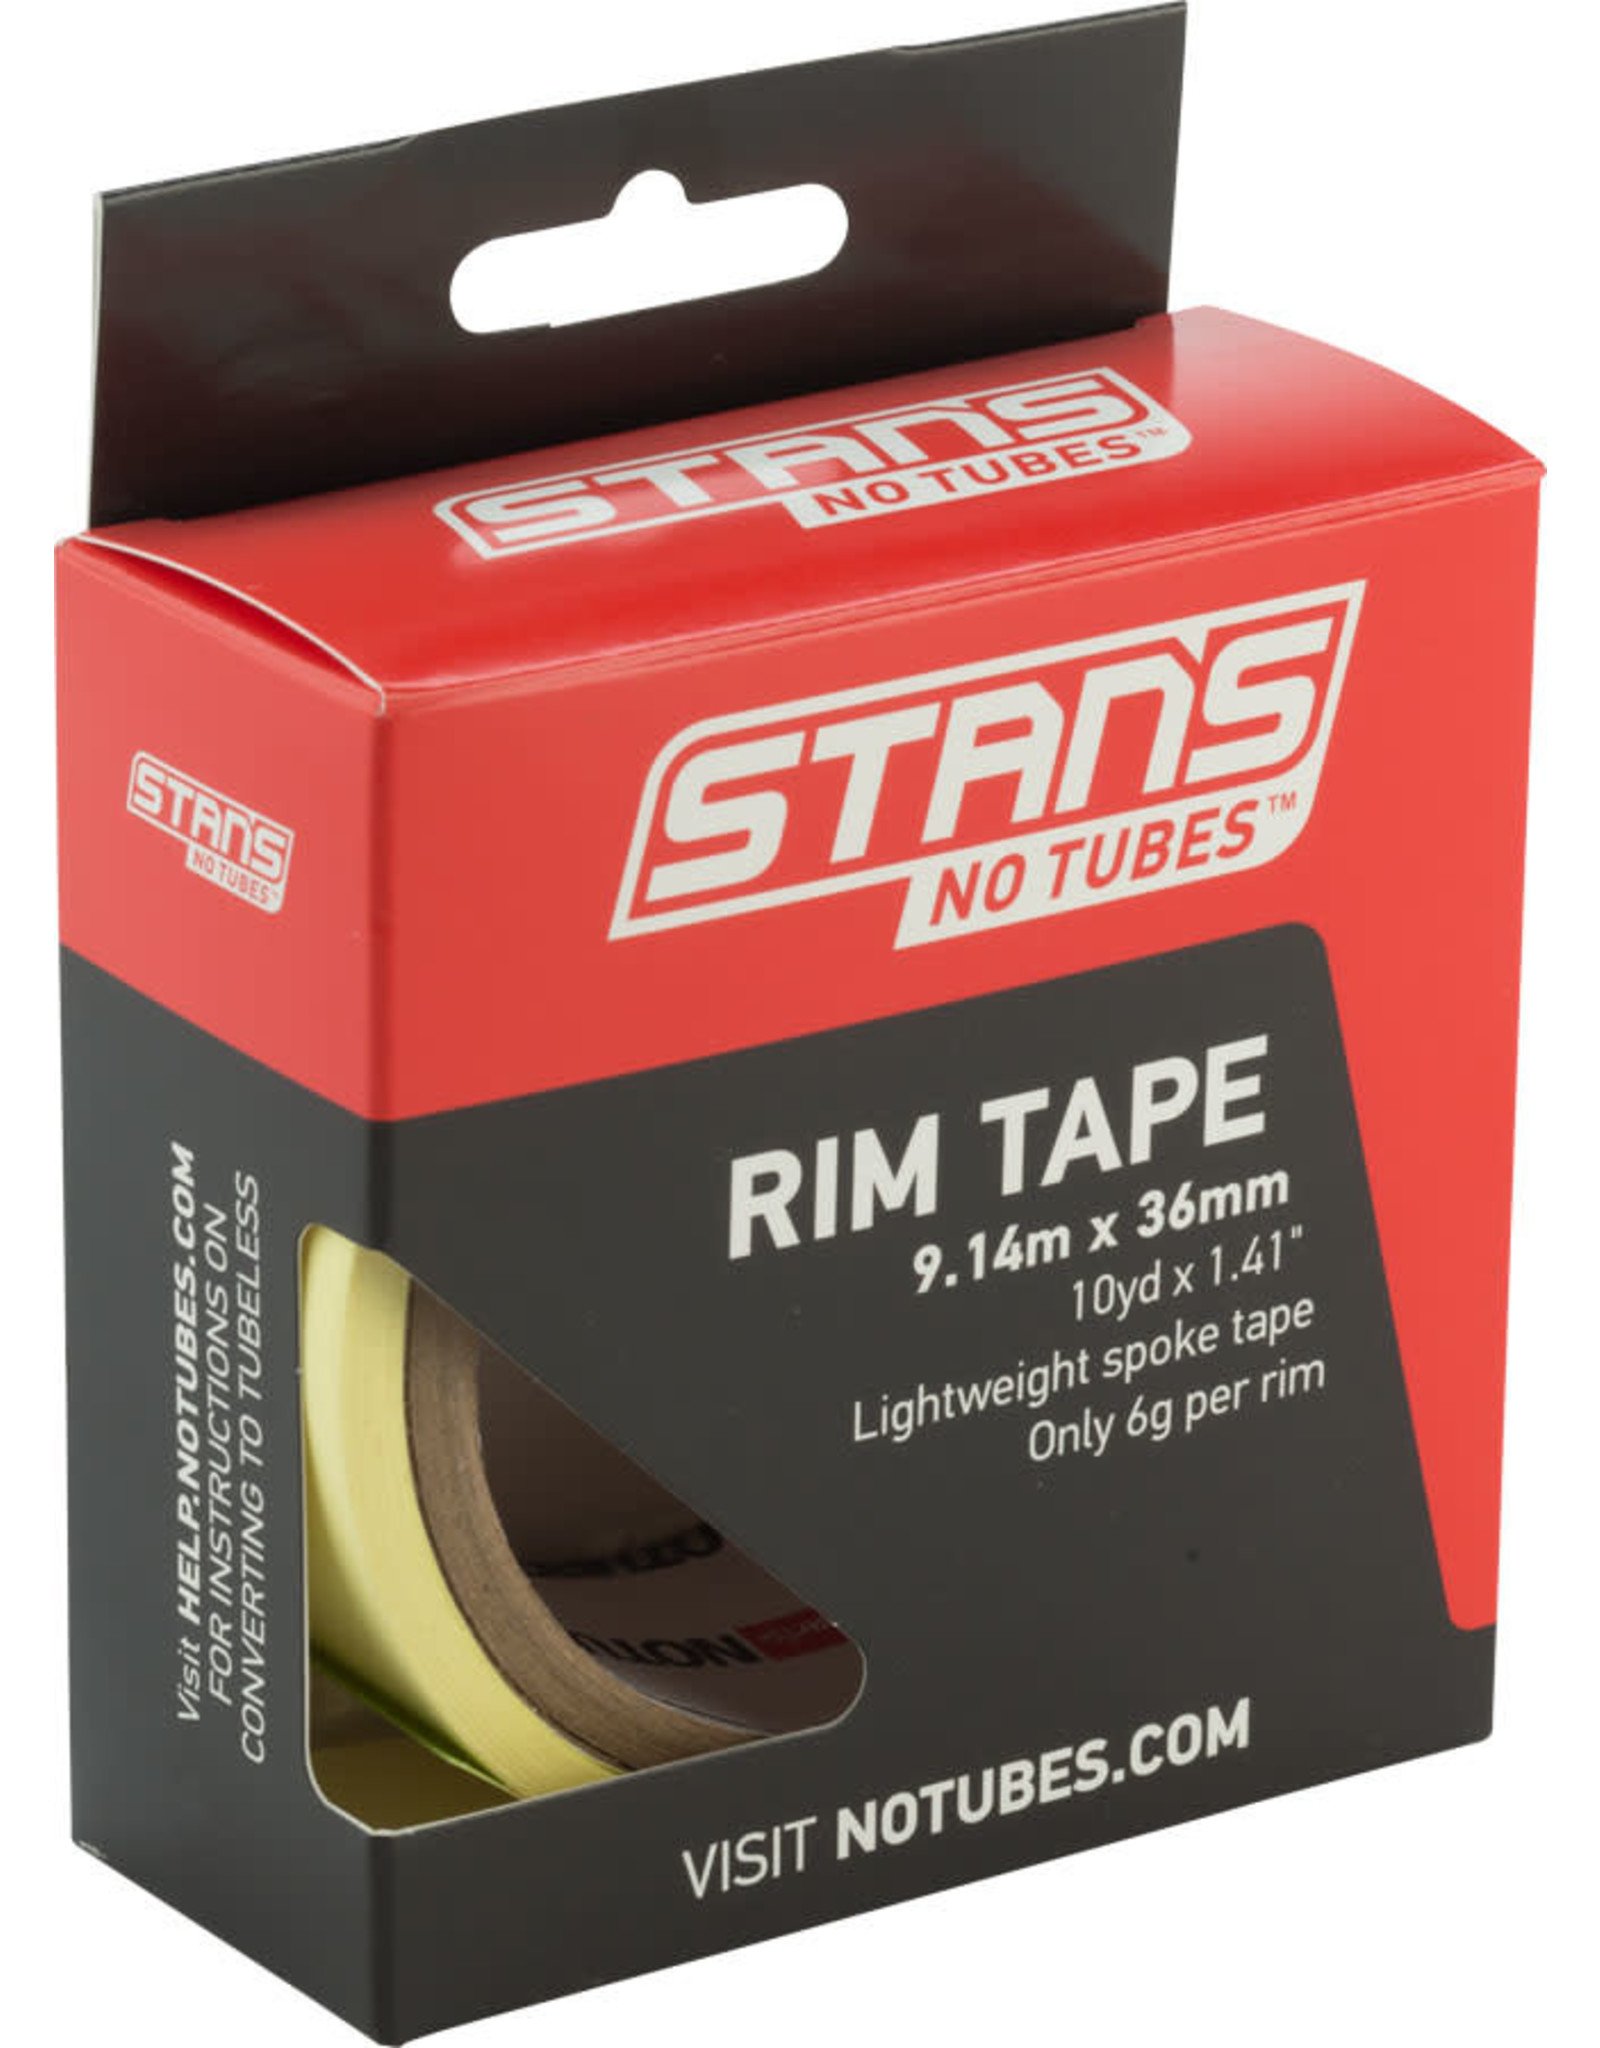 Stan's No Tubes Stan's NoTubes Rim Tape: 36mm x 10 yard roll